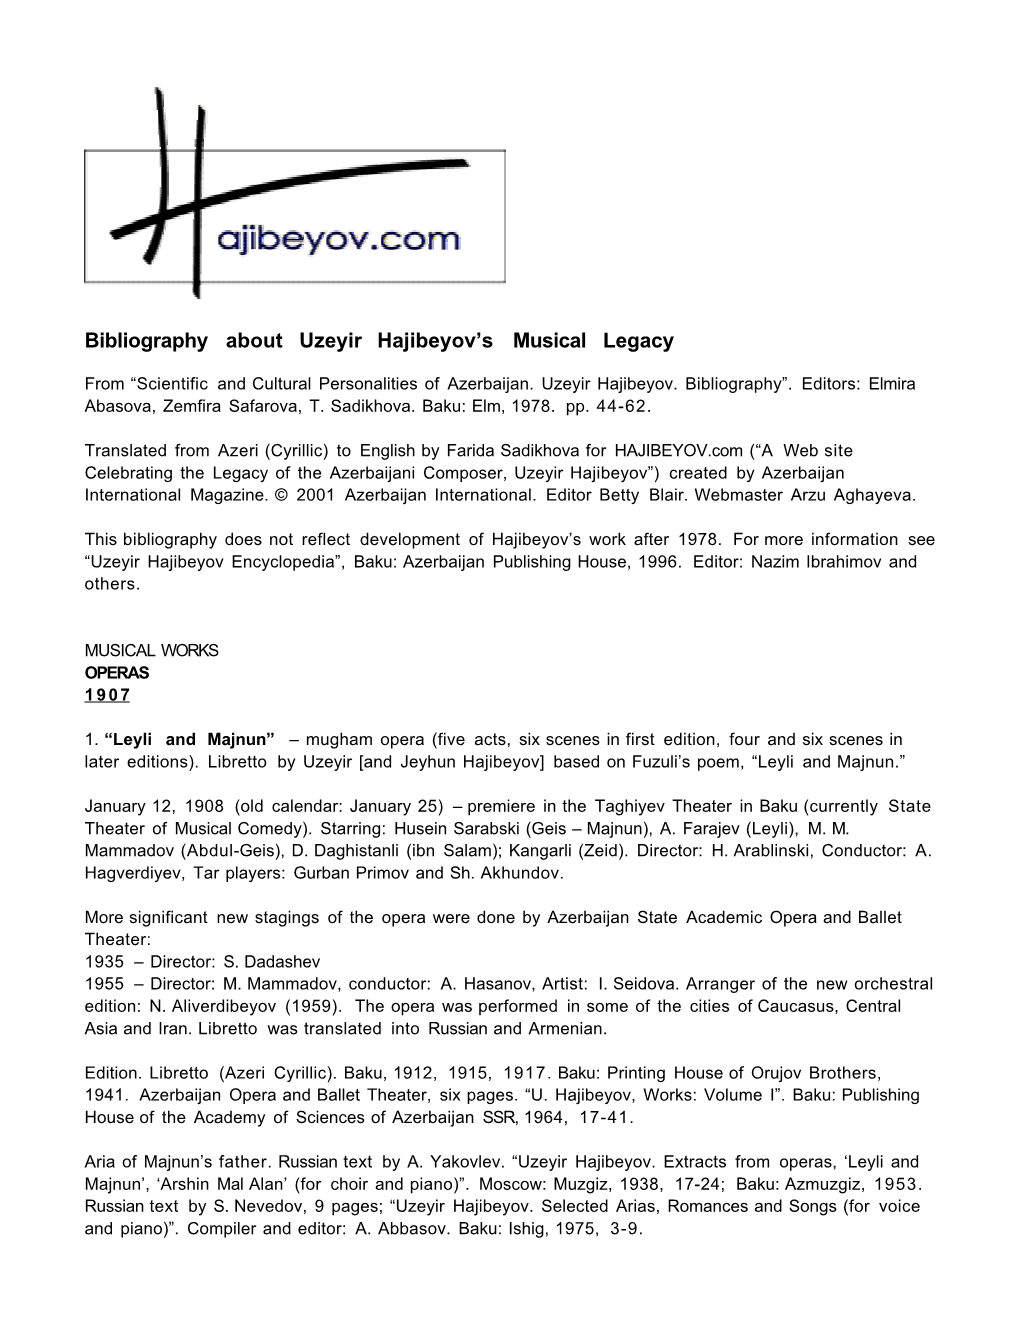 Bibliography About Uzeyir Hajibeyov's Musical Legacy